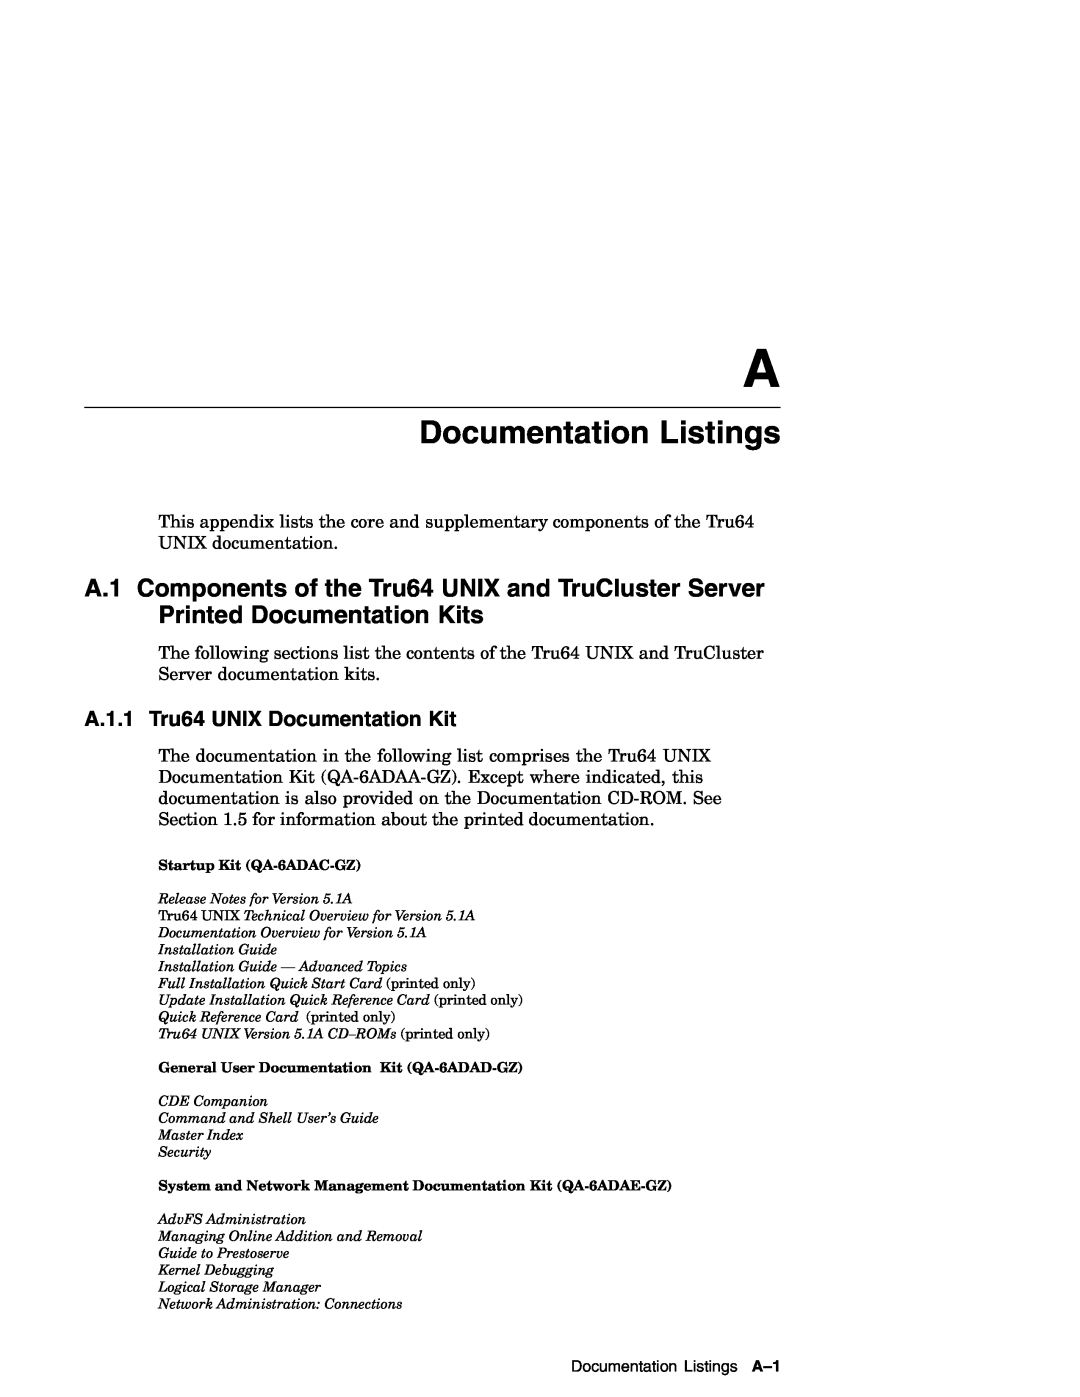 Compaq AA-RH8RD-TE manual Documentation Listings, A.1.1 Tru64 UNIX Documentation Kit 